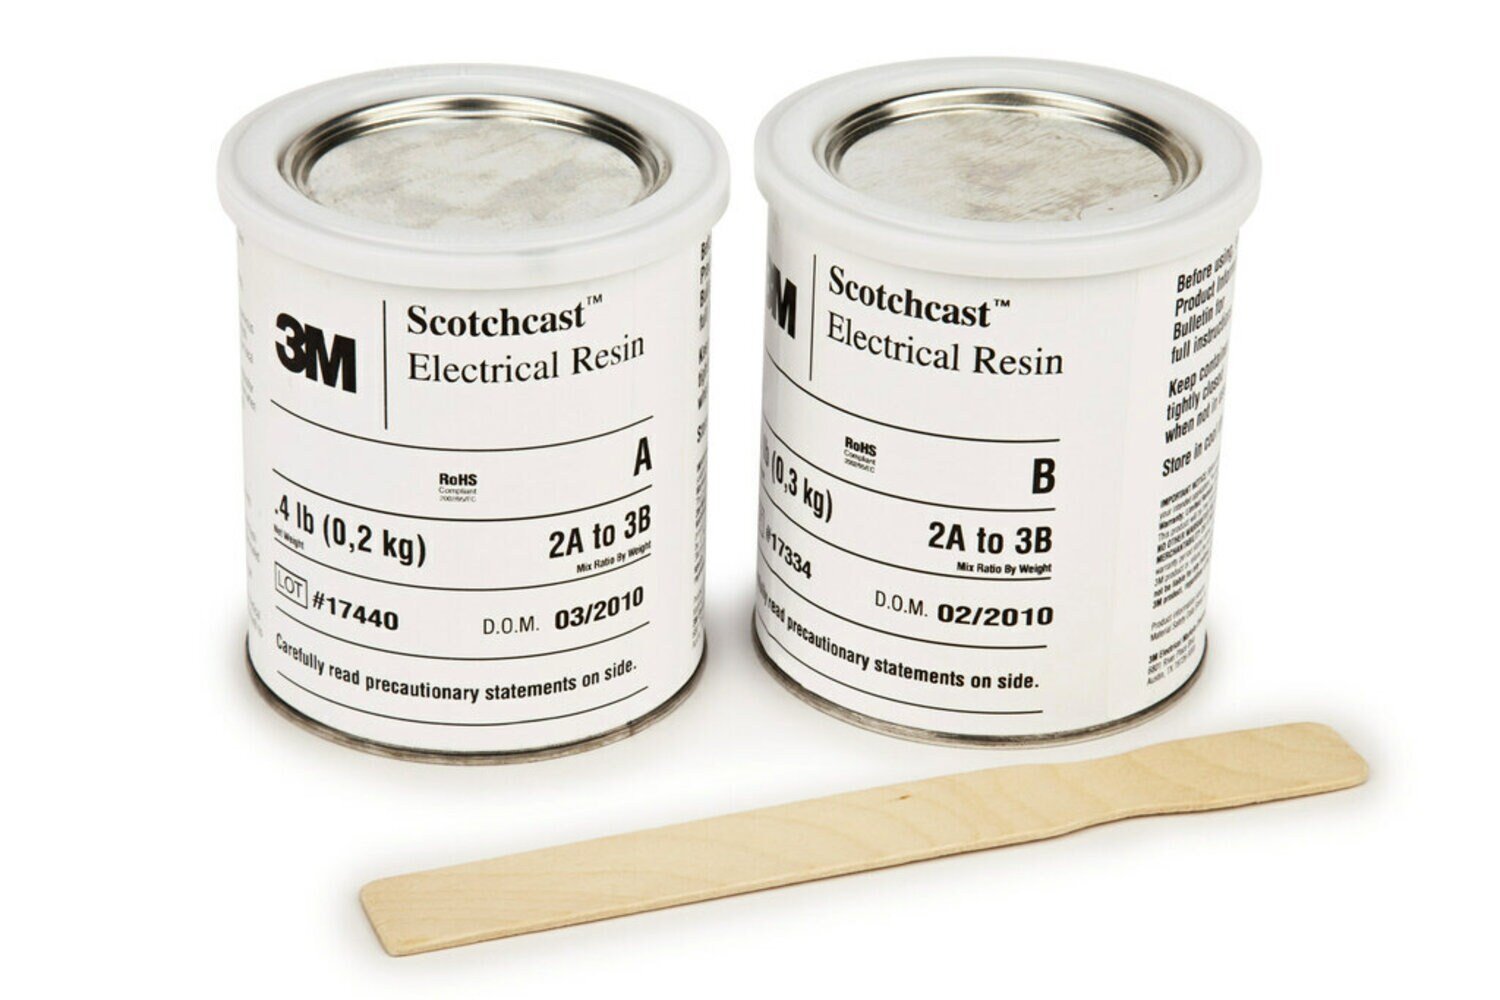 7000133716 - 3M Scotchcast Electrical Resin 241 (14 lb), 1 Kits/Case